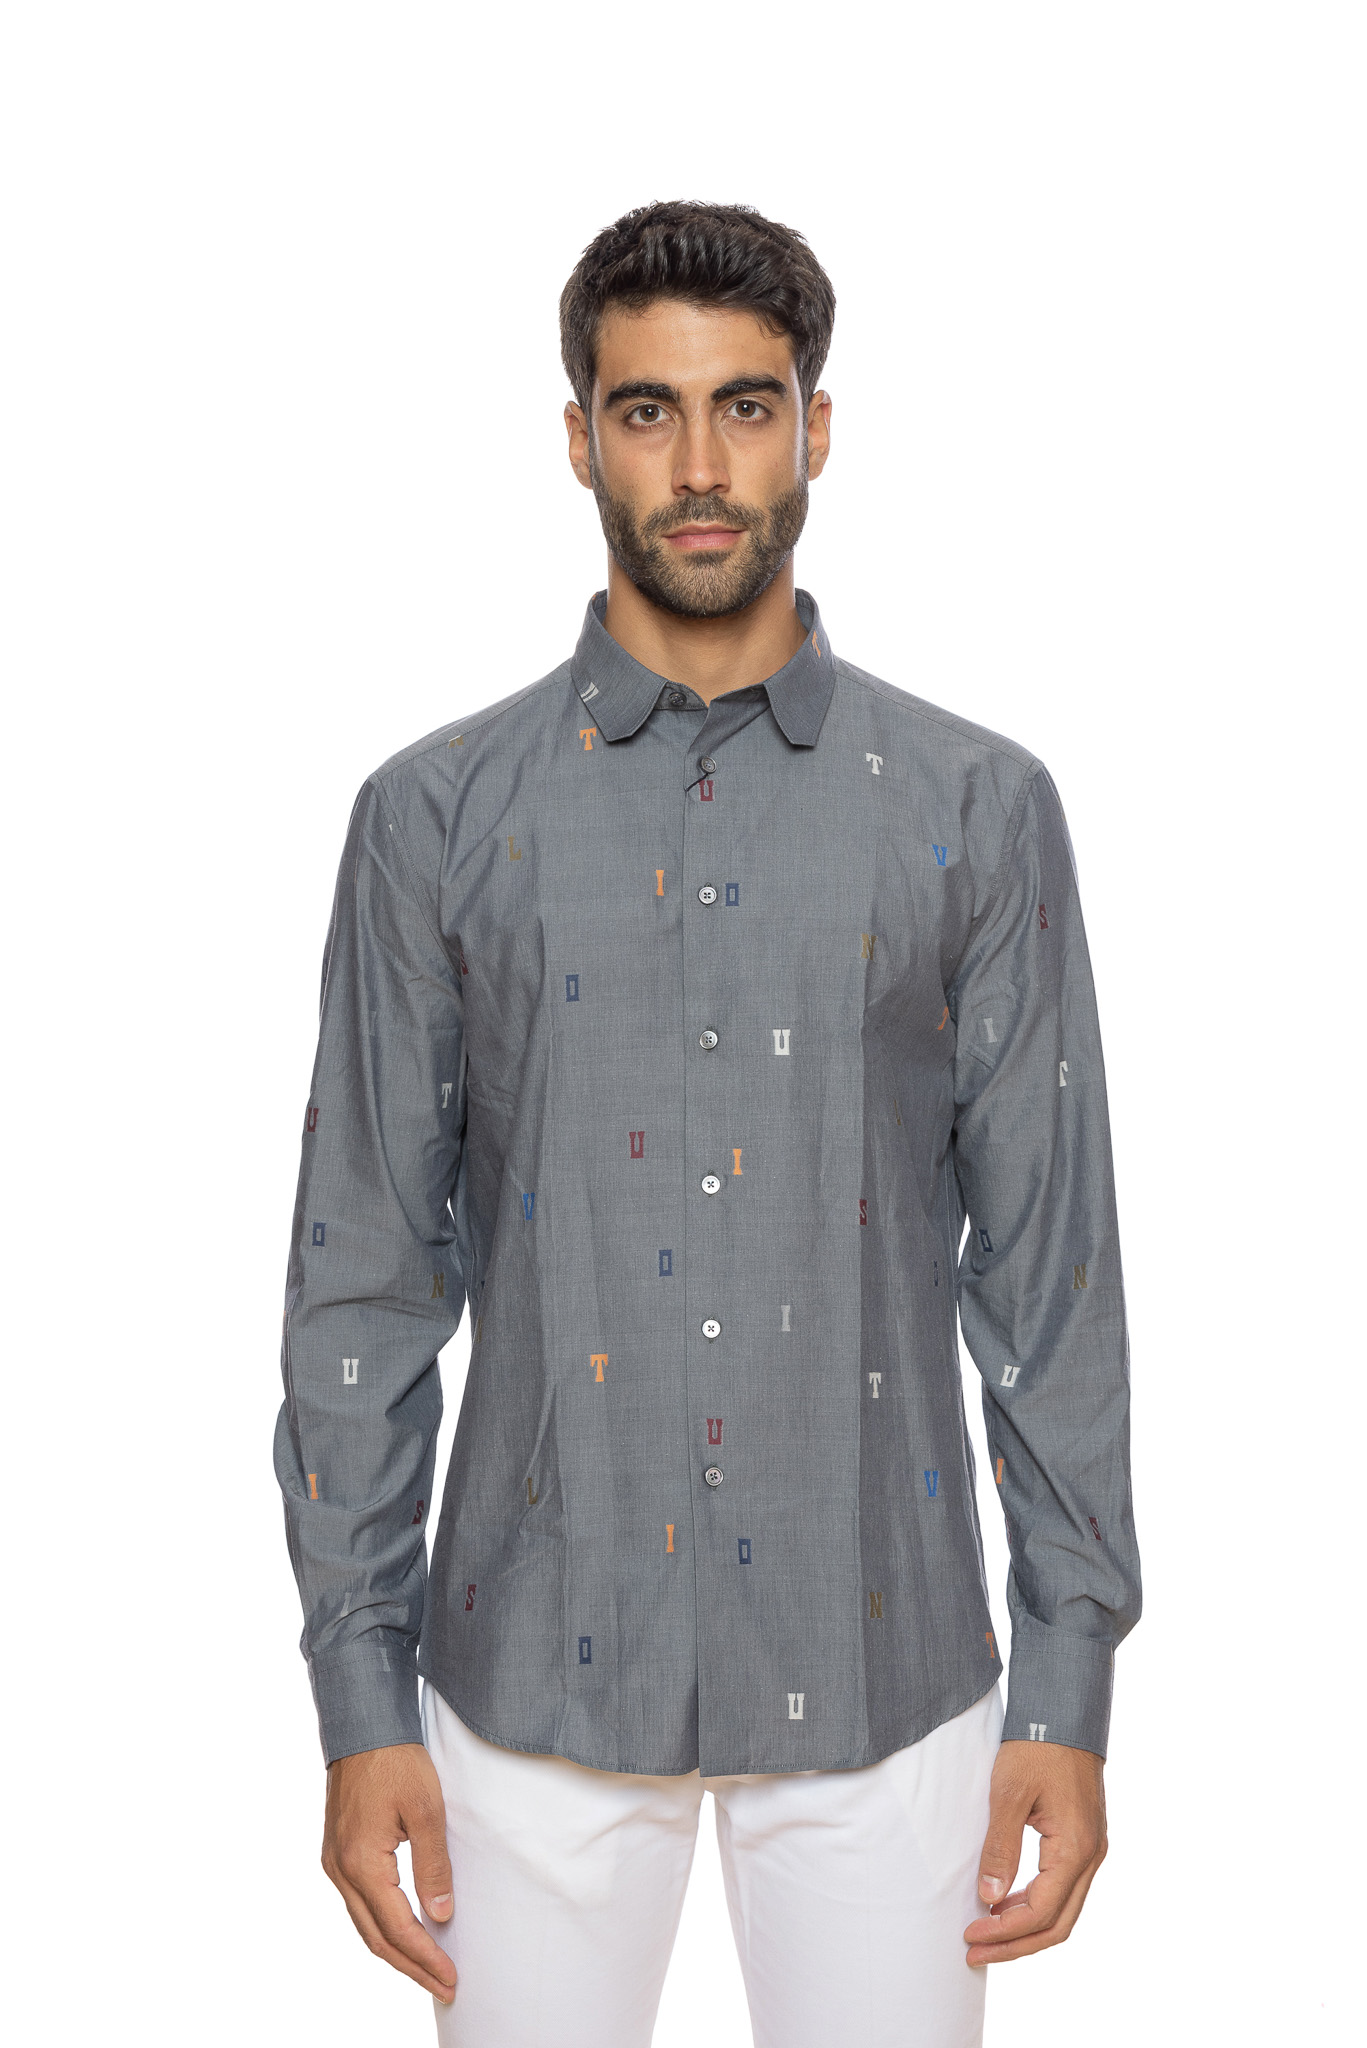 Louis Vuitton - DNA Collar Regular Shirt - Gris Clair - Men - Size: 41 - Luxury